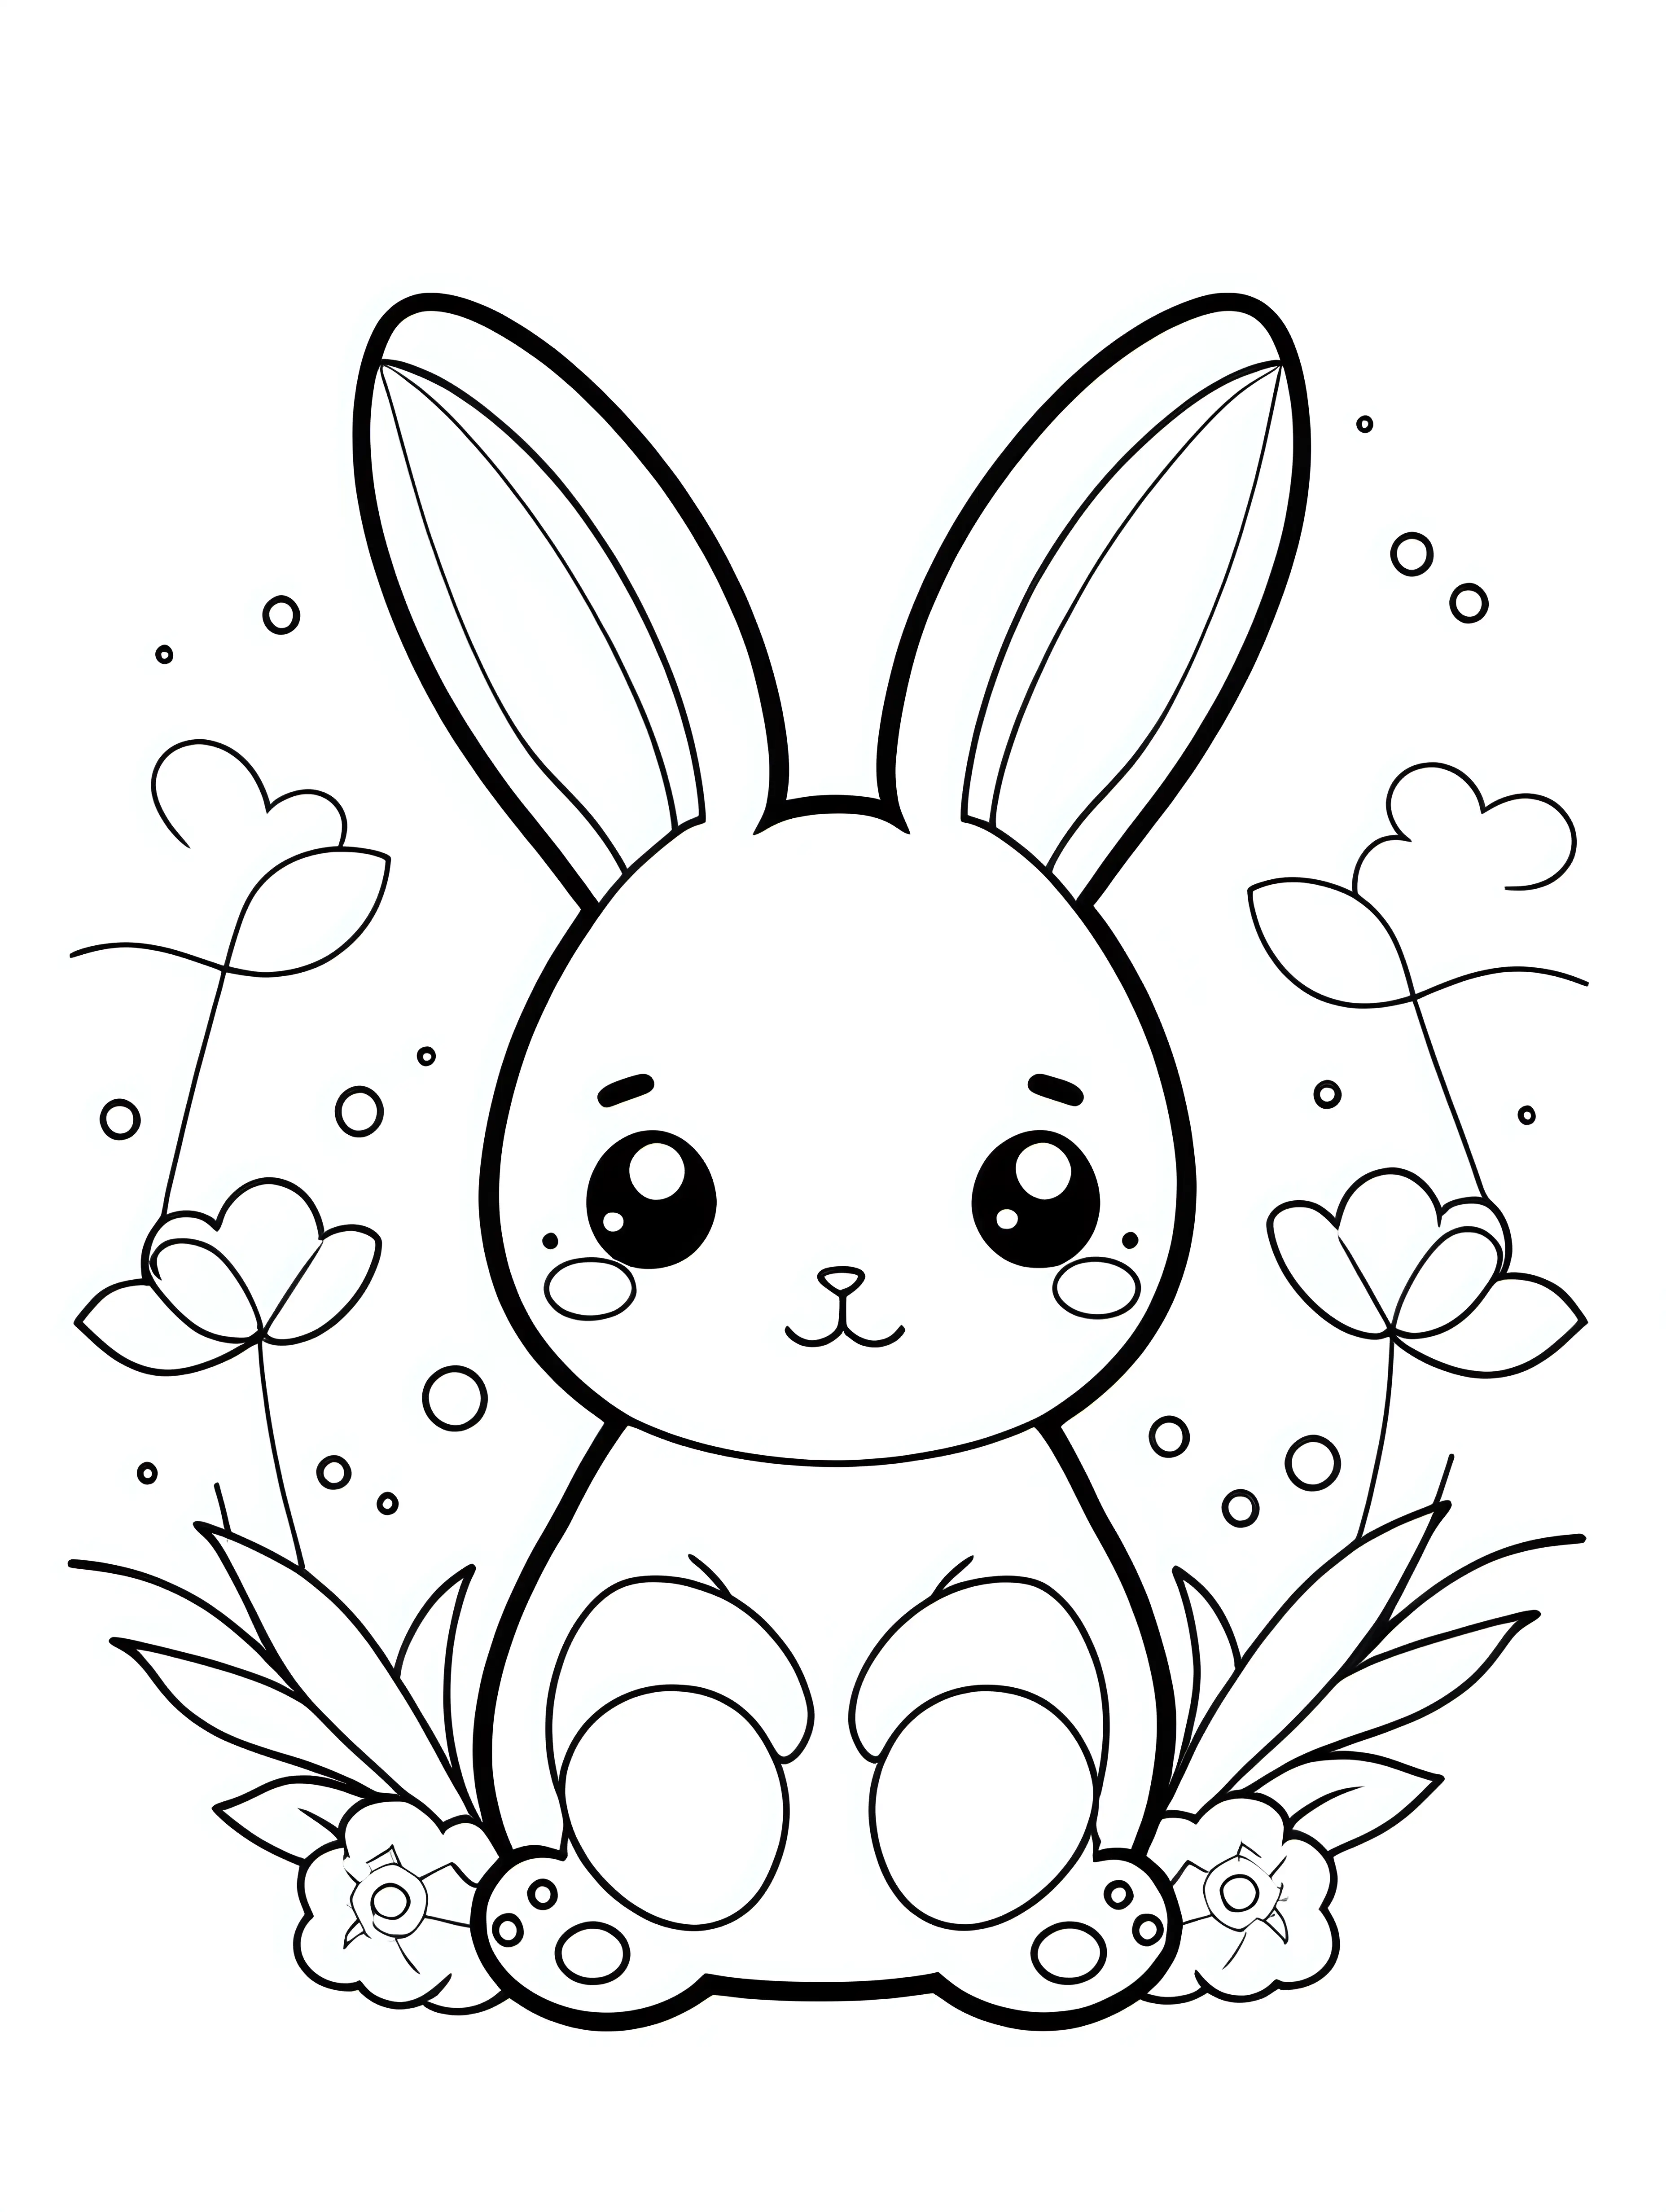 colouring page of A minimalistic kawaii bunny 

